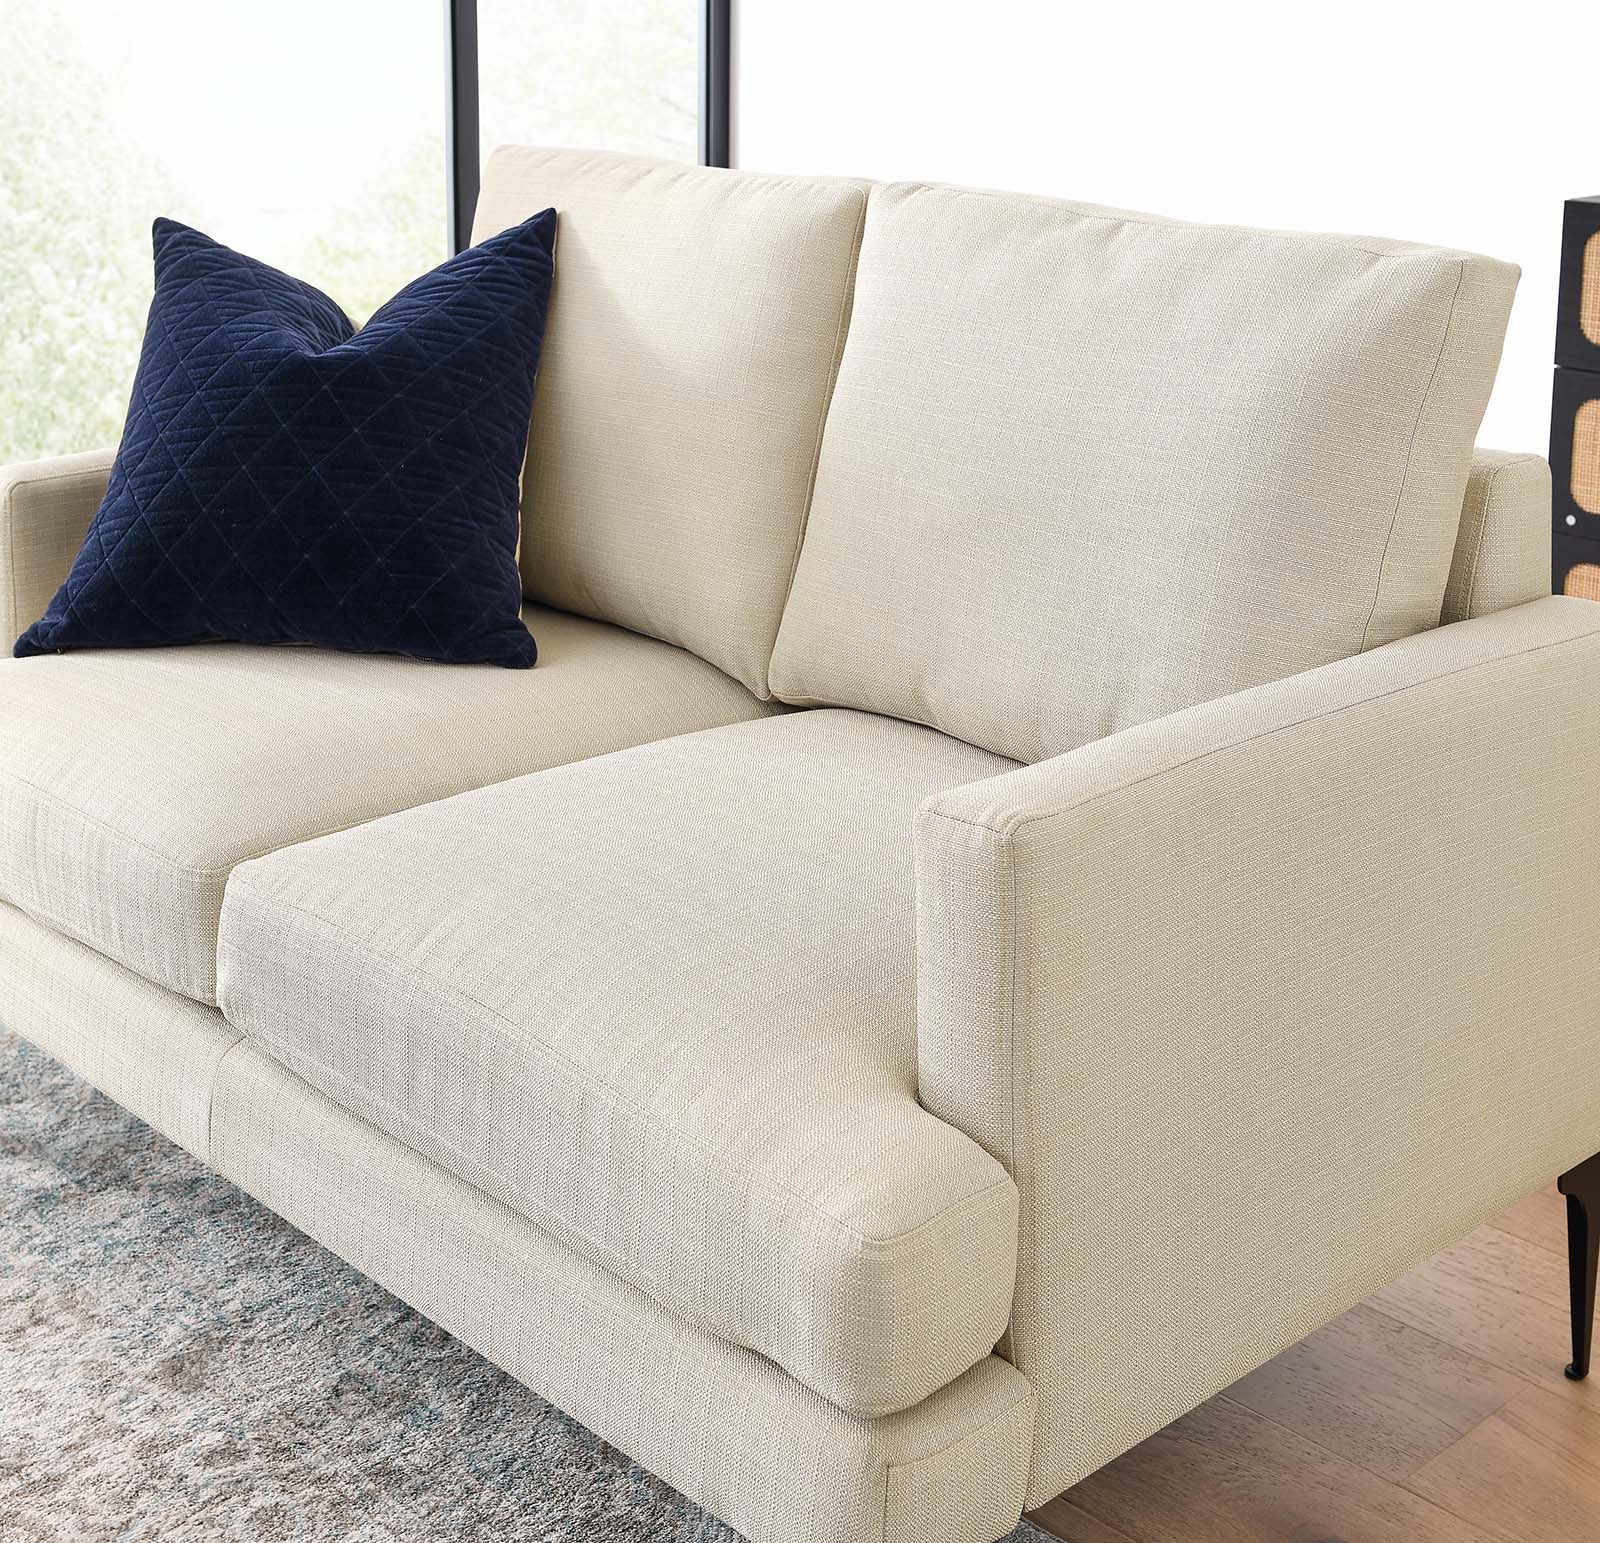 Evermore Upholstered Fabric Loveseat - East Shore Modern Home Furnishings